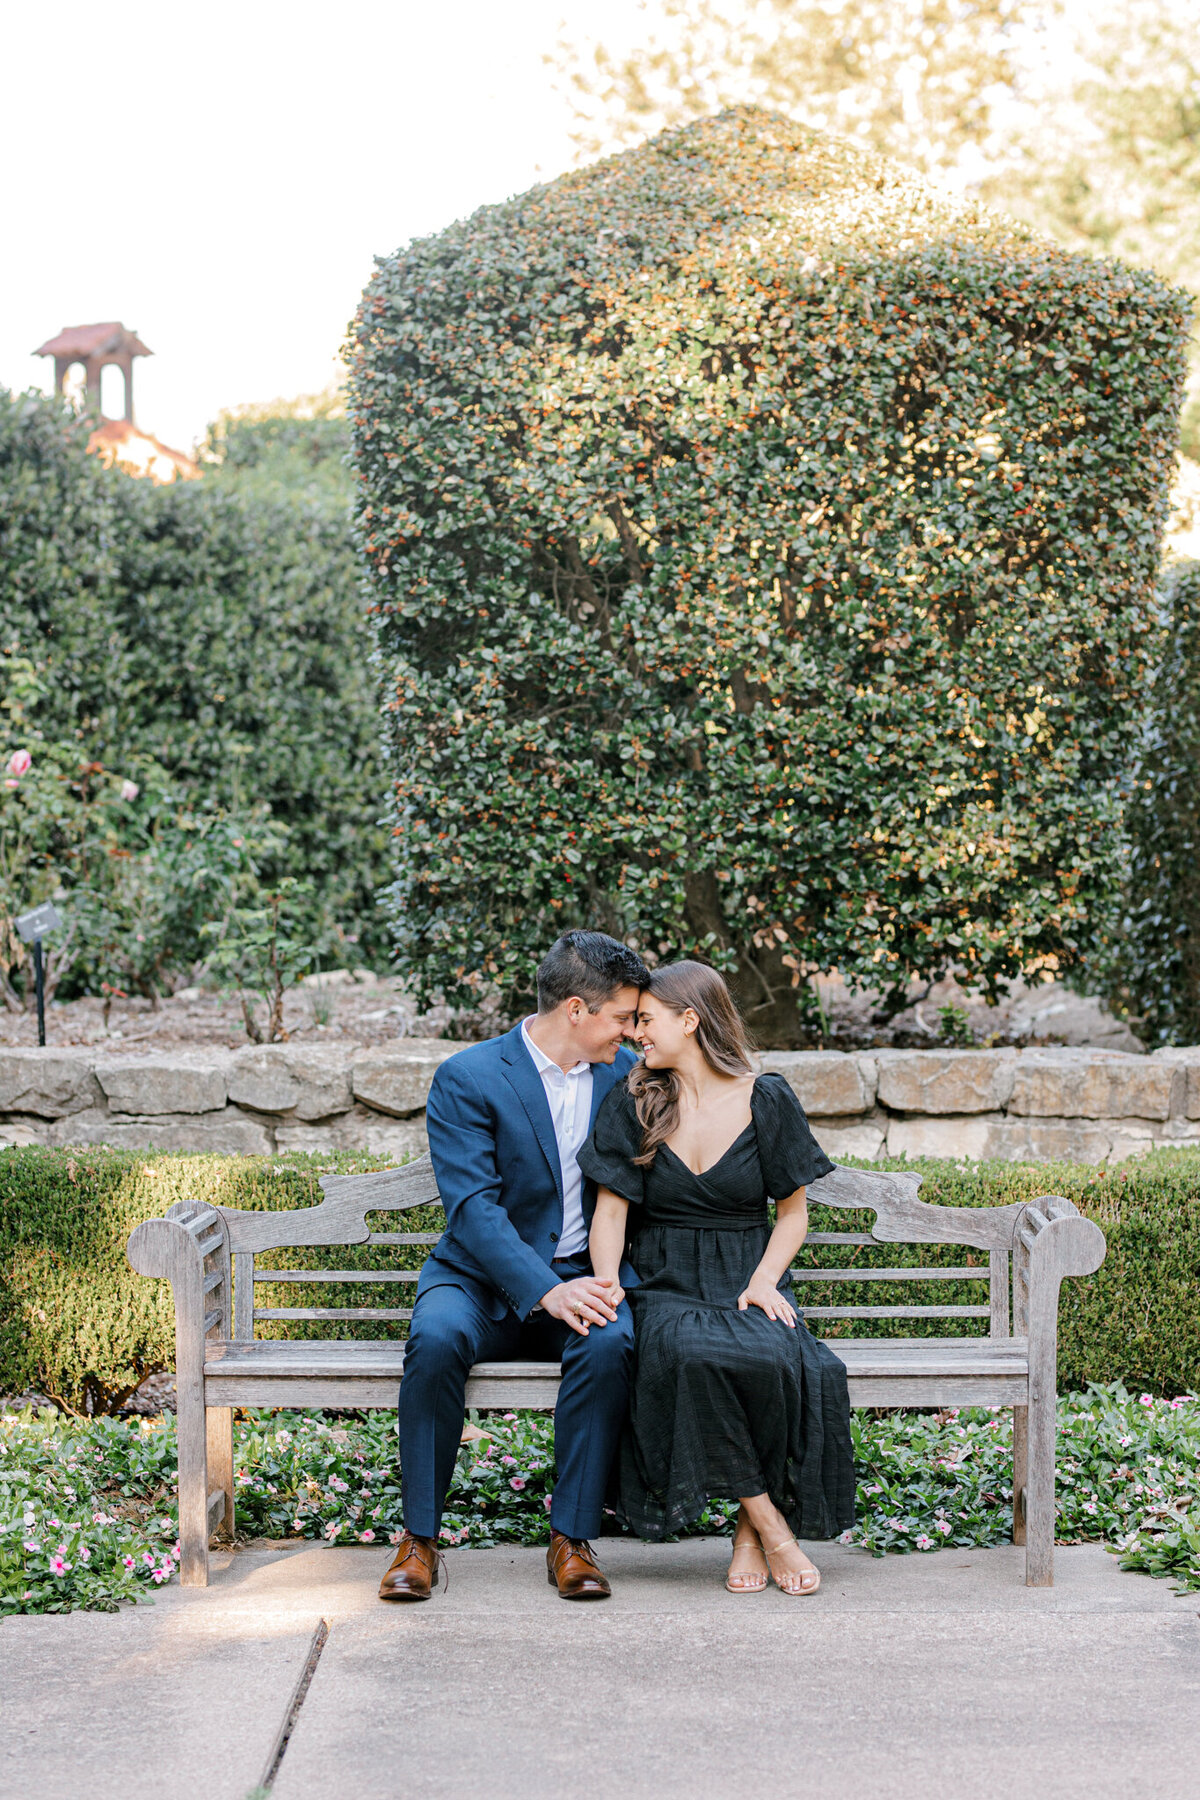 Annie & Logan's Engagement Session at The Dallas Arboretum | Sami Kathryn Photography | Dallas Wedding Photographer-22